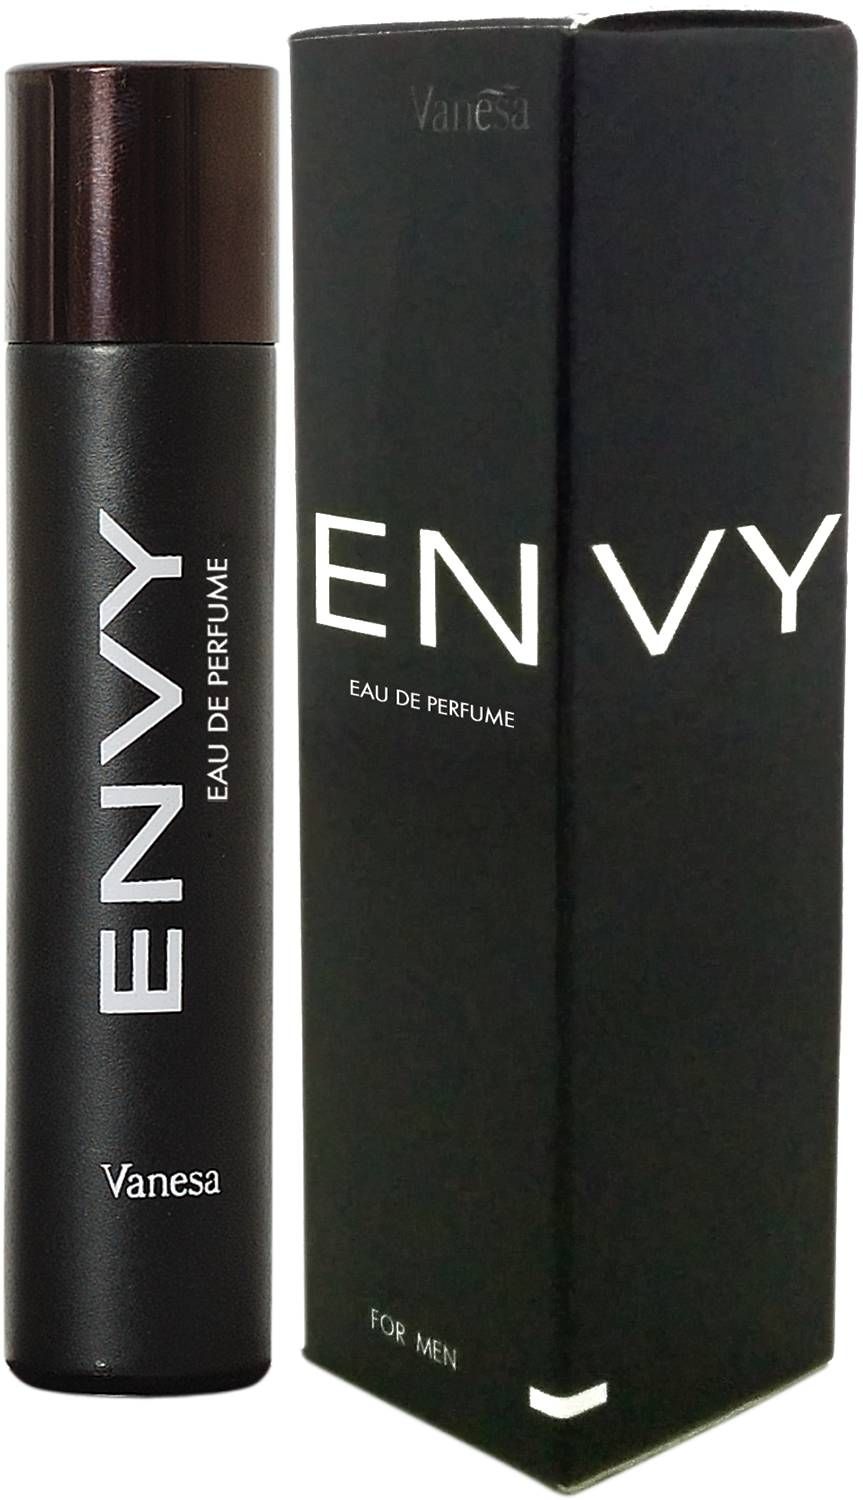 perfume envy